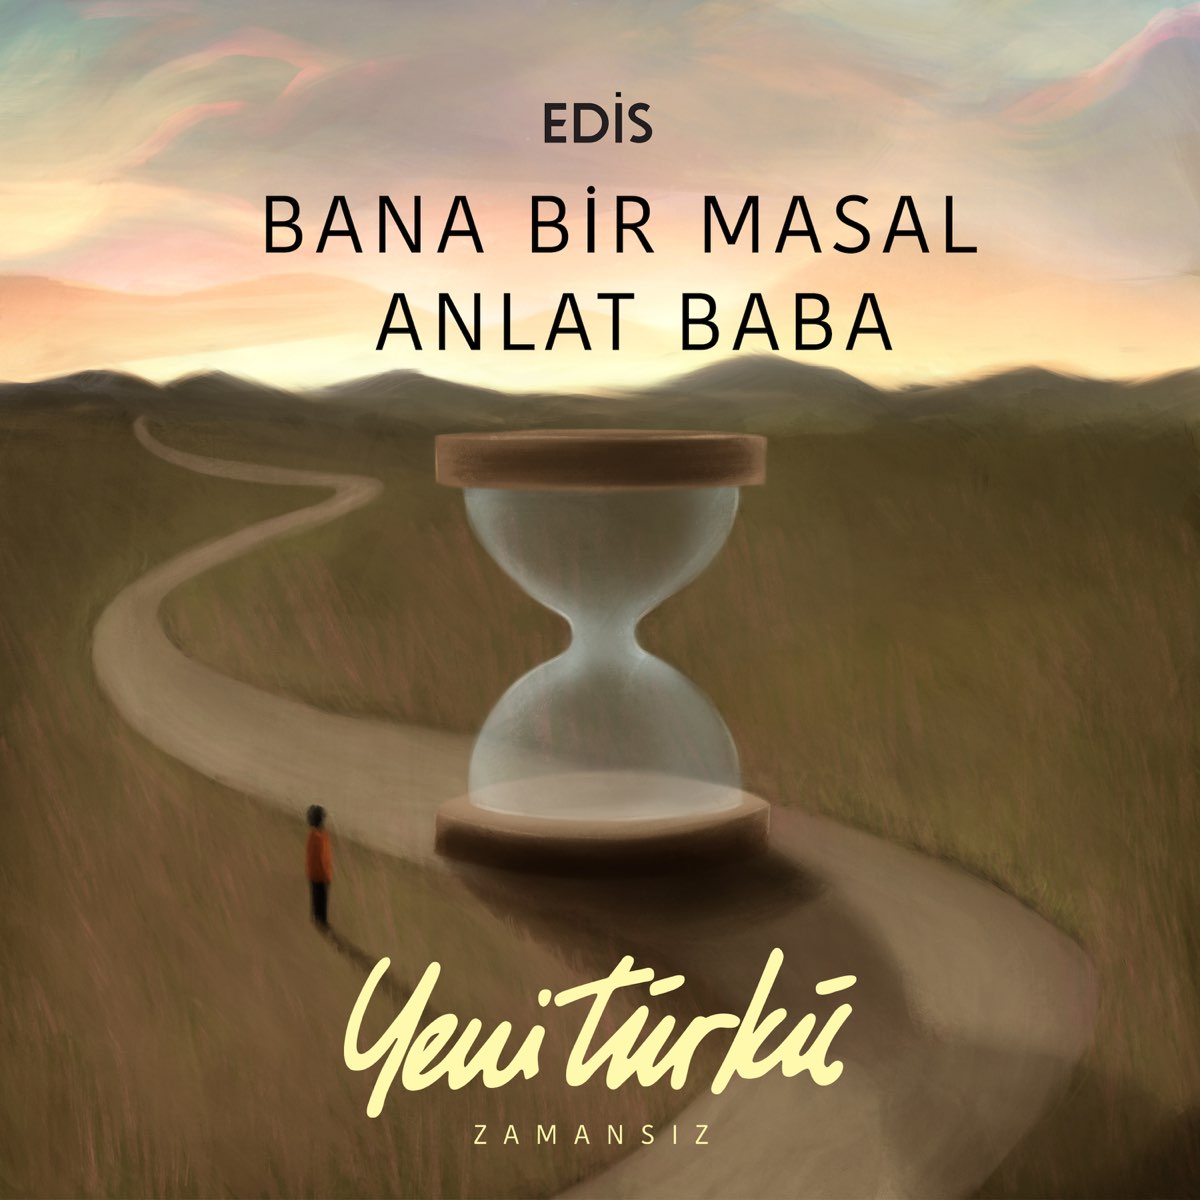 Bana Bir Masal Anlat Baba - Single - Album by EDIS - Apple Music